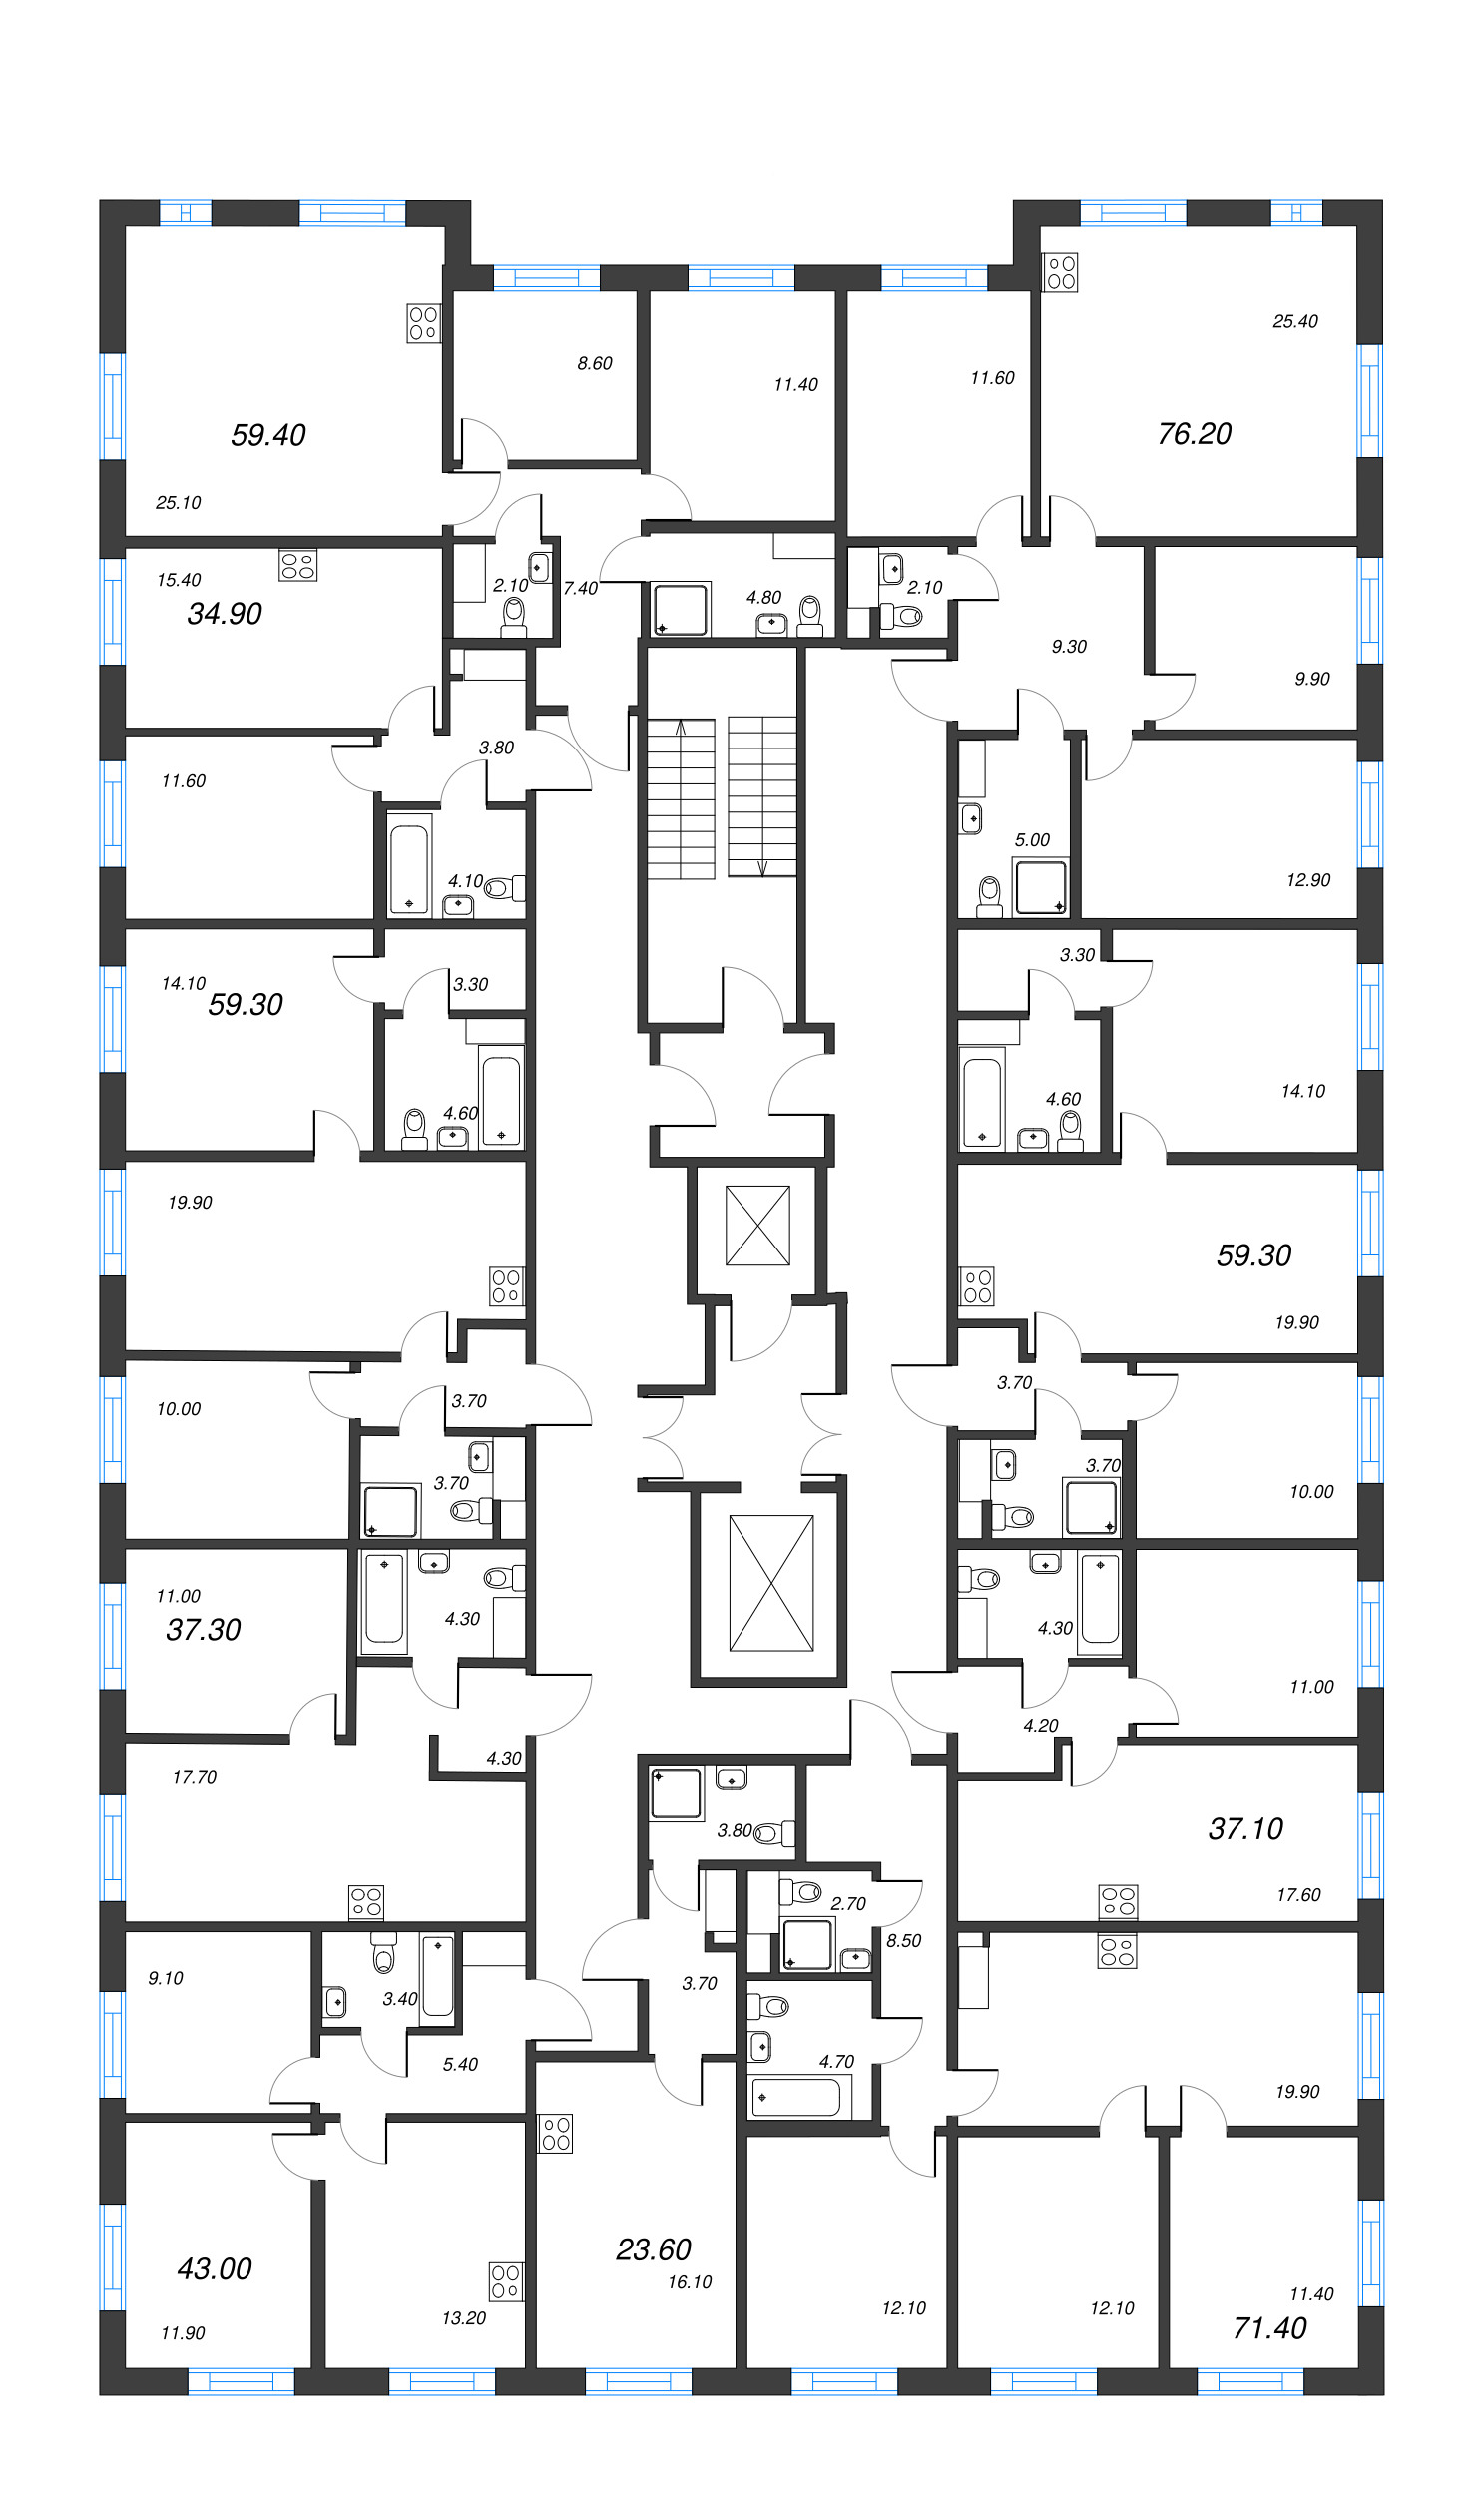 3-комнатная (Евро) квартира, 59.3 м² - планировка этажа